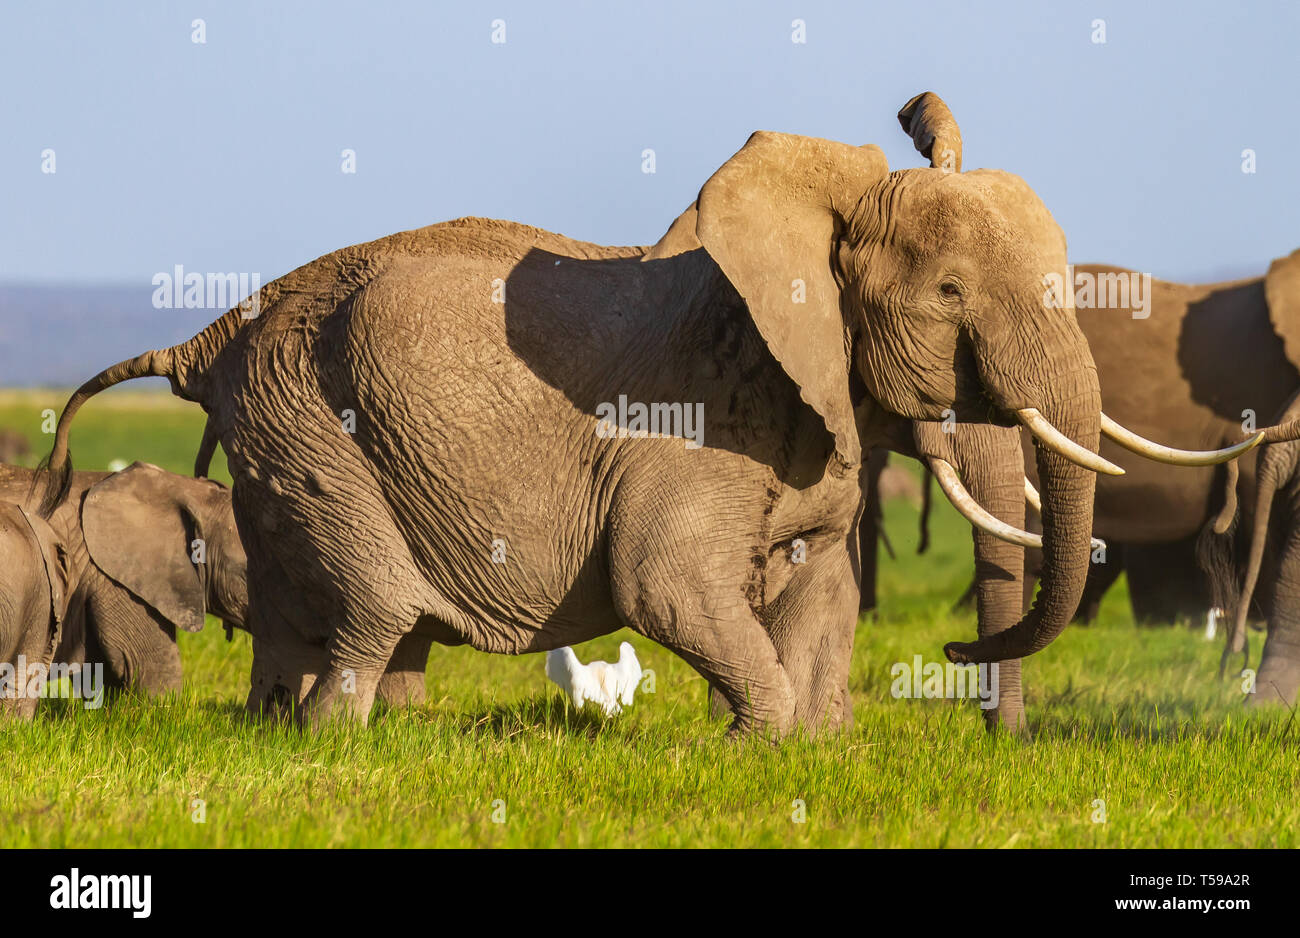 Huge African elephant flaps big ears, side view of "Loxodonta africana" with long ivory tusks. Amboseli National Park, Kenya, East Africa Stock Photo